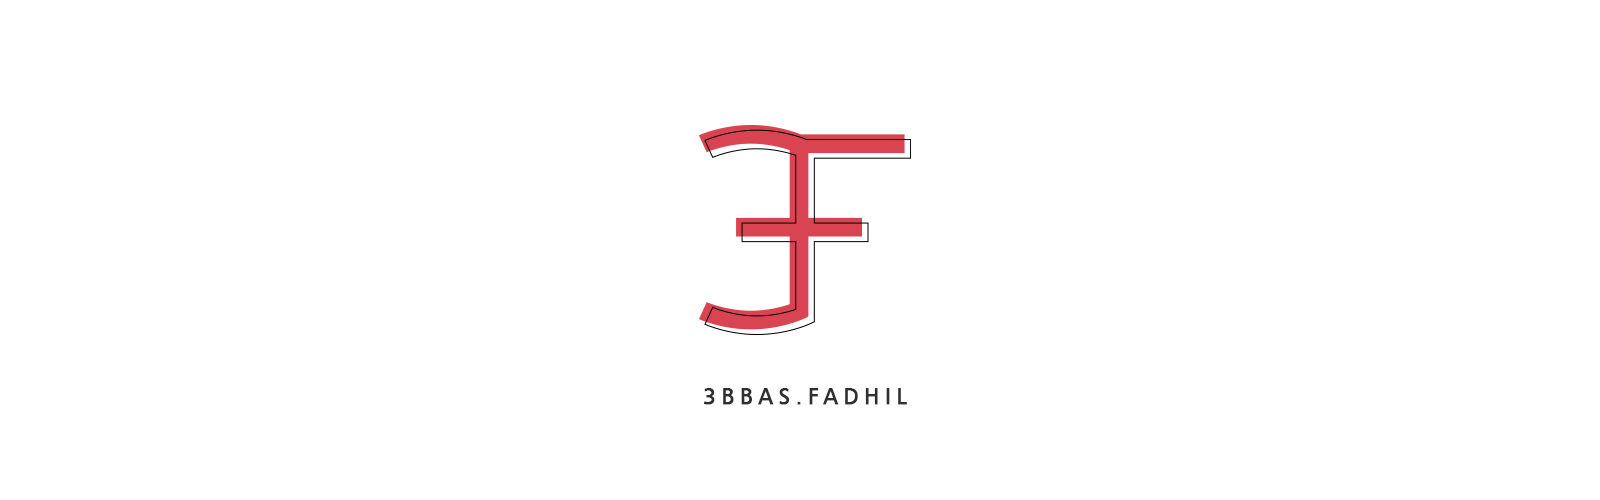 3bbas Fadhil